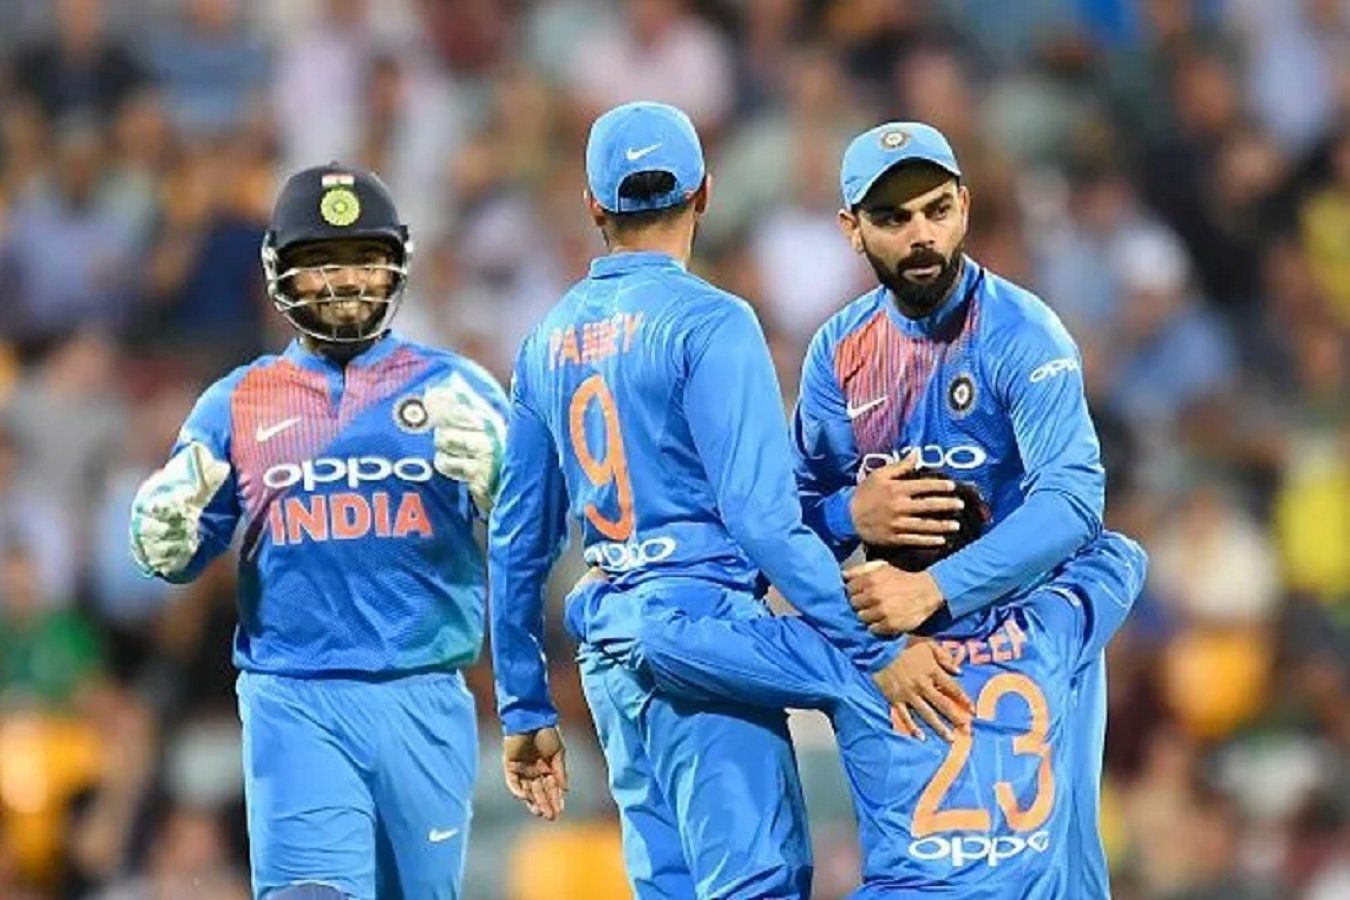 India vs West Indies T20, ODI 2019 Schedule सभी मैचों का समय और दिन